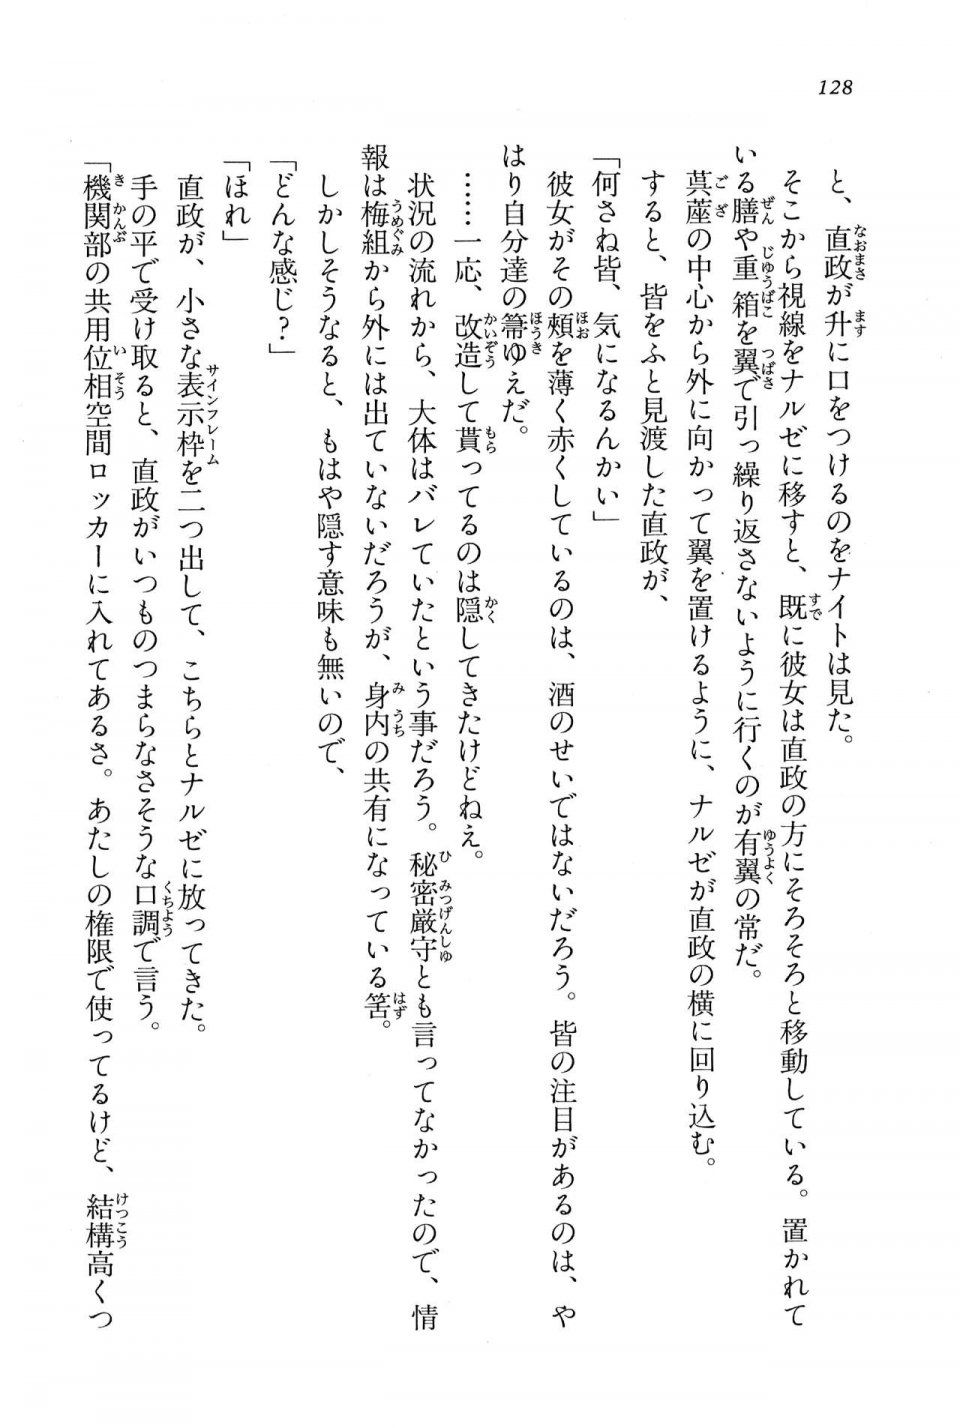 Kyoukai Senjou no Horizon BD Special Mininovel Vol 7(4A) - Photo #132